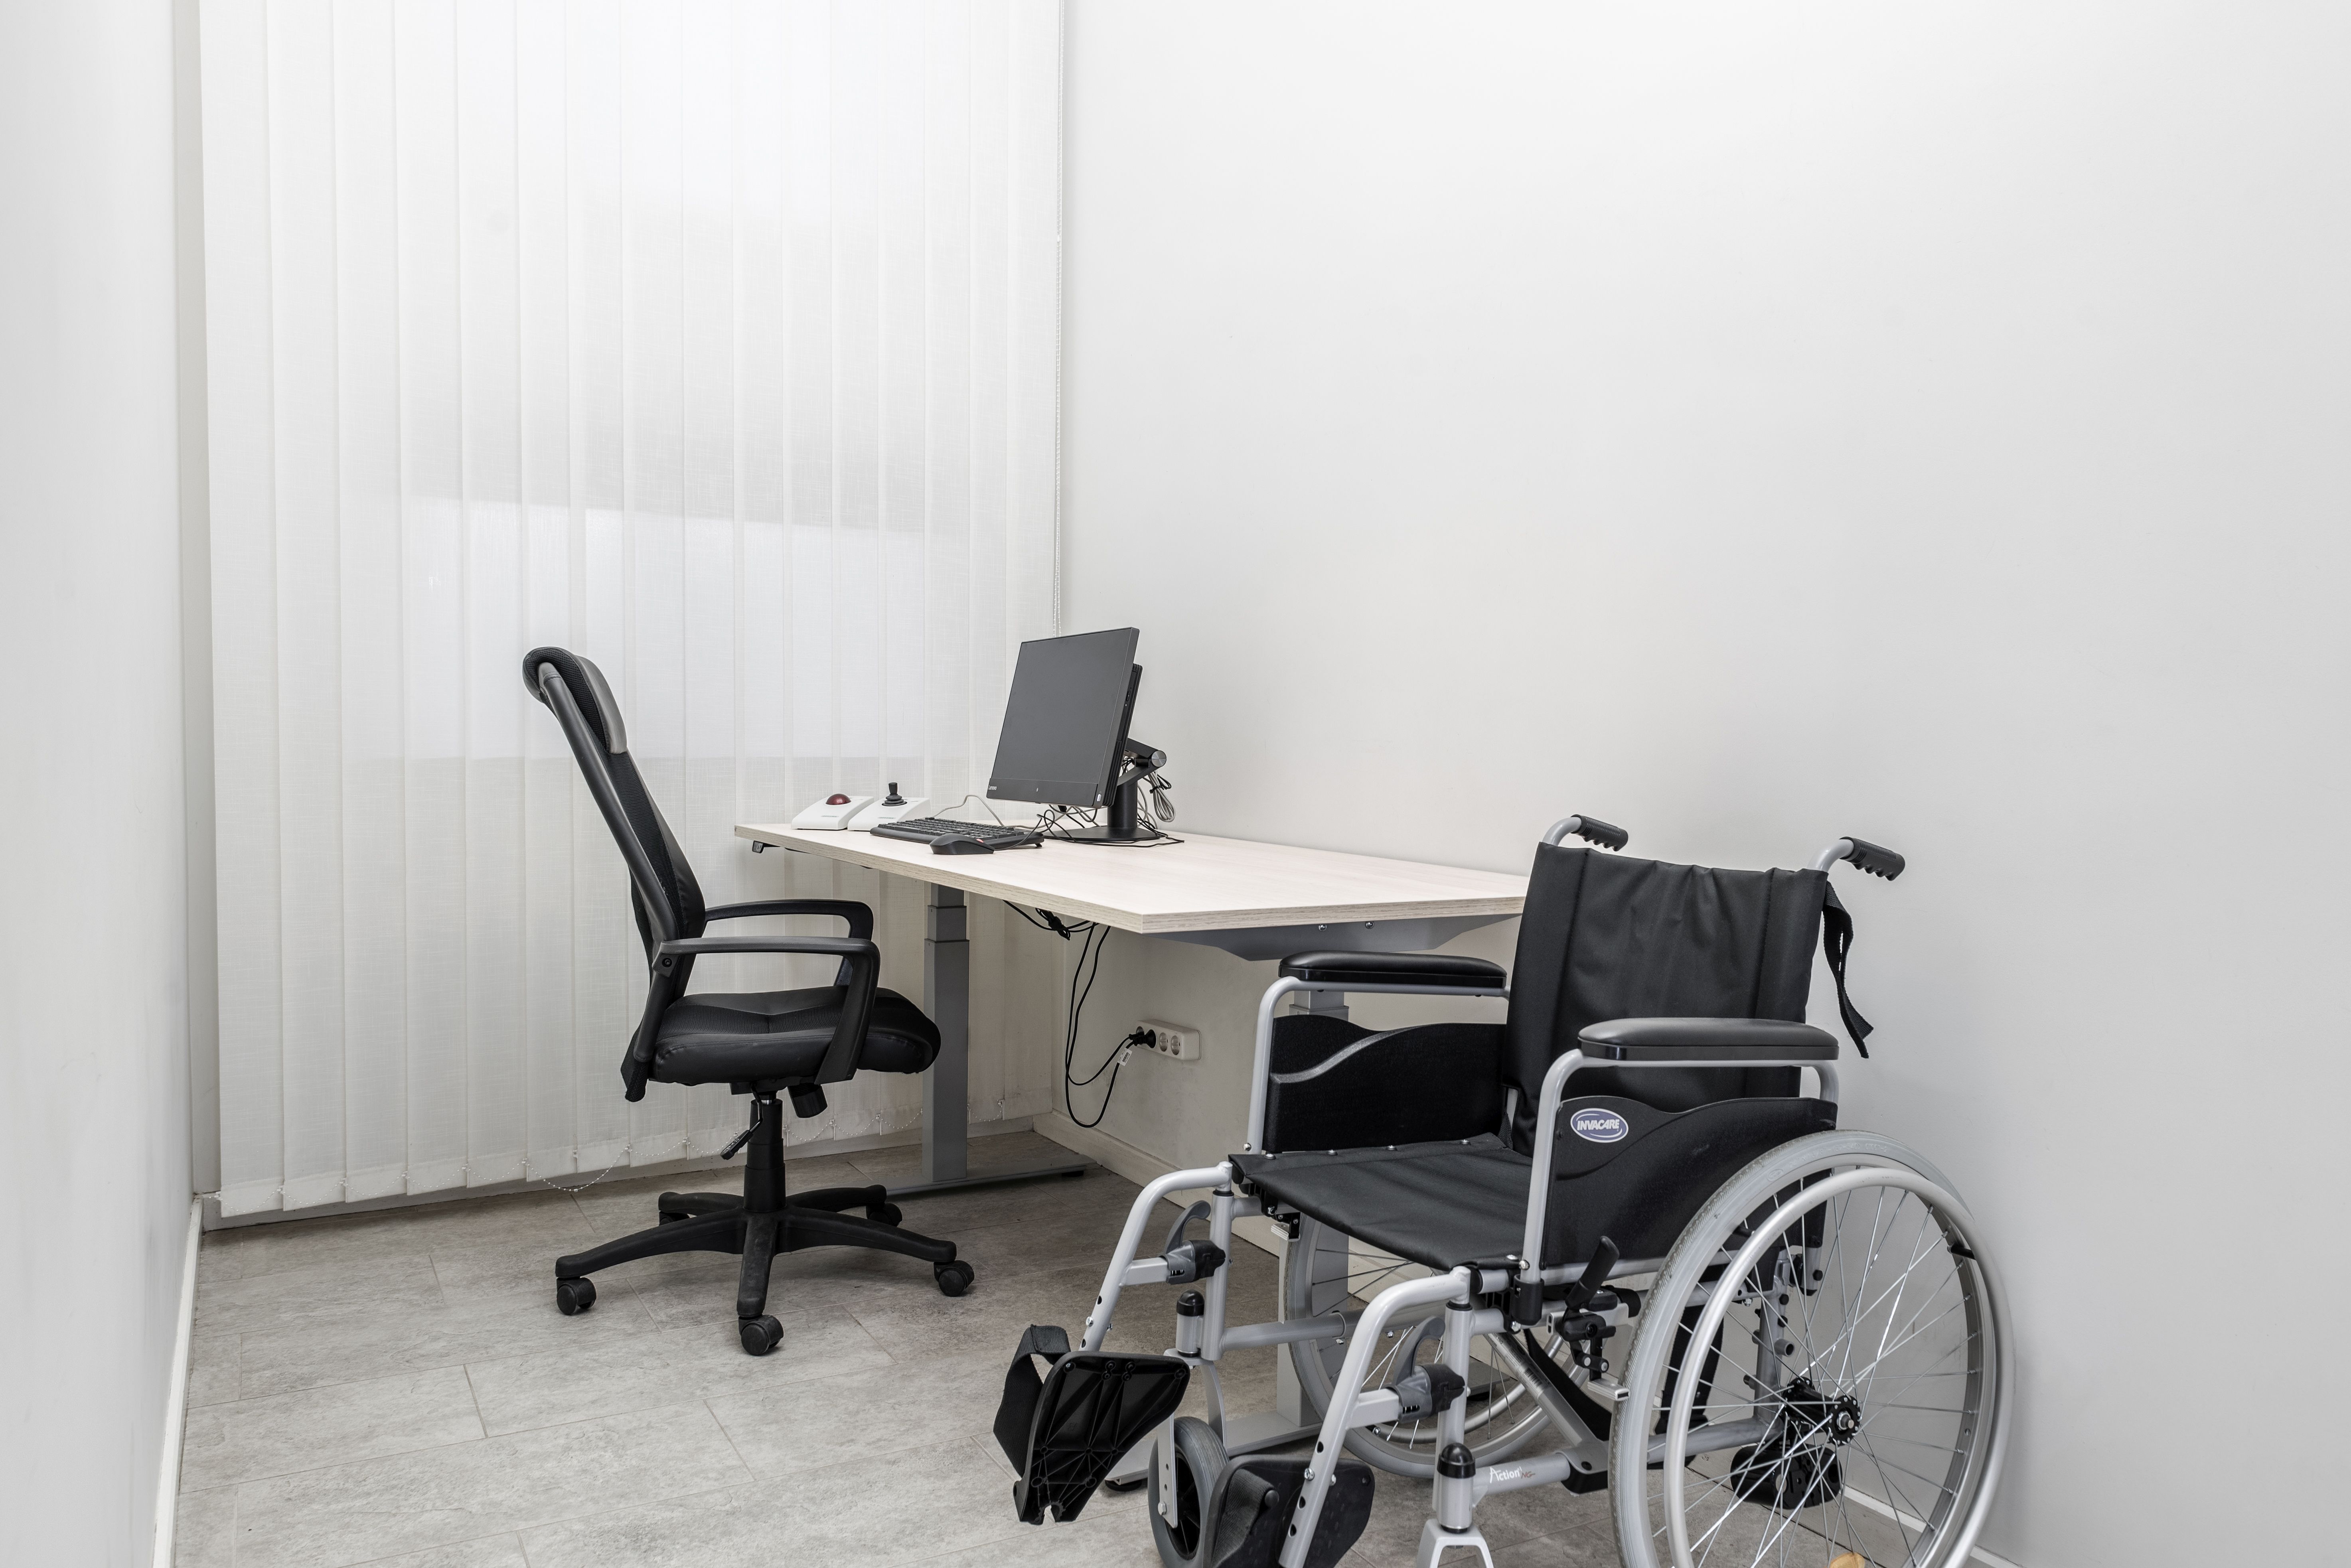 Darbo vieta neįgaliesiems